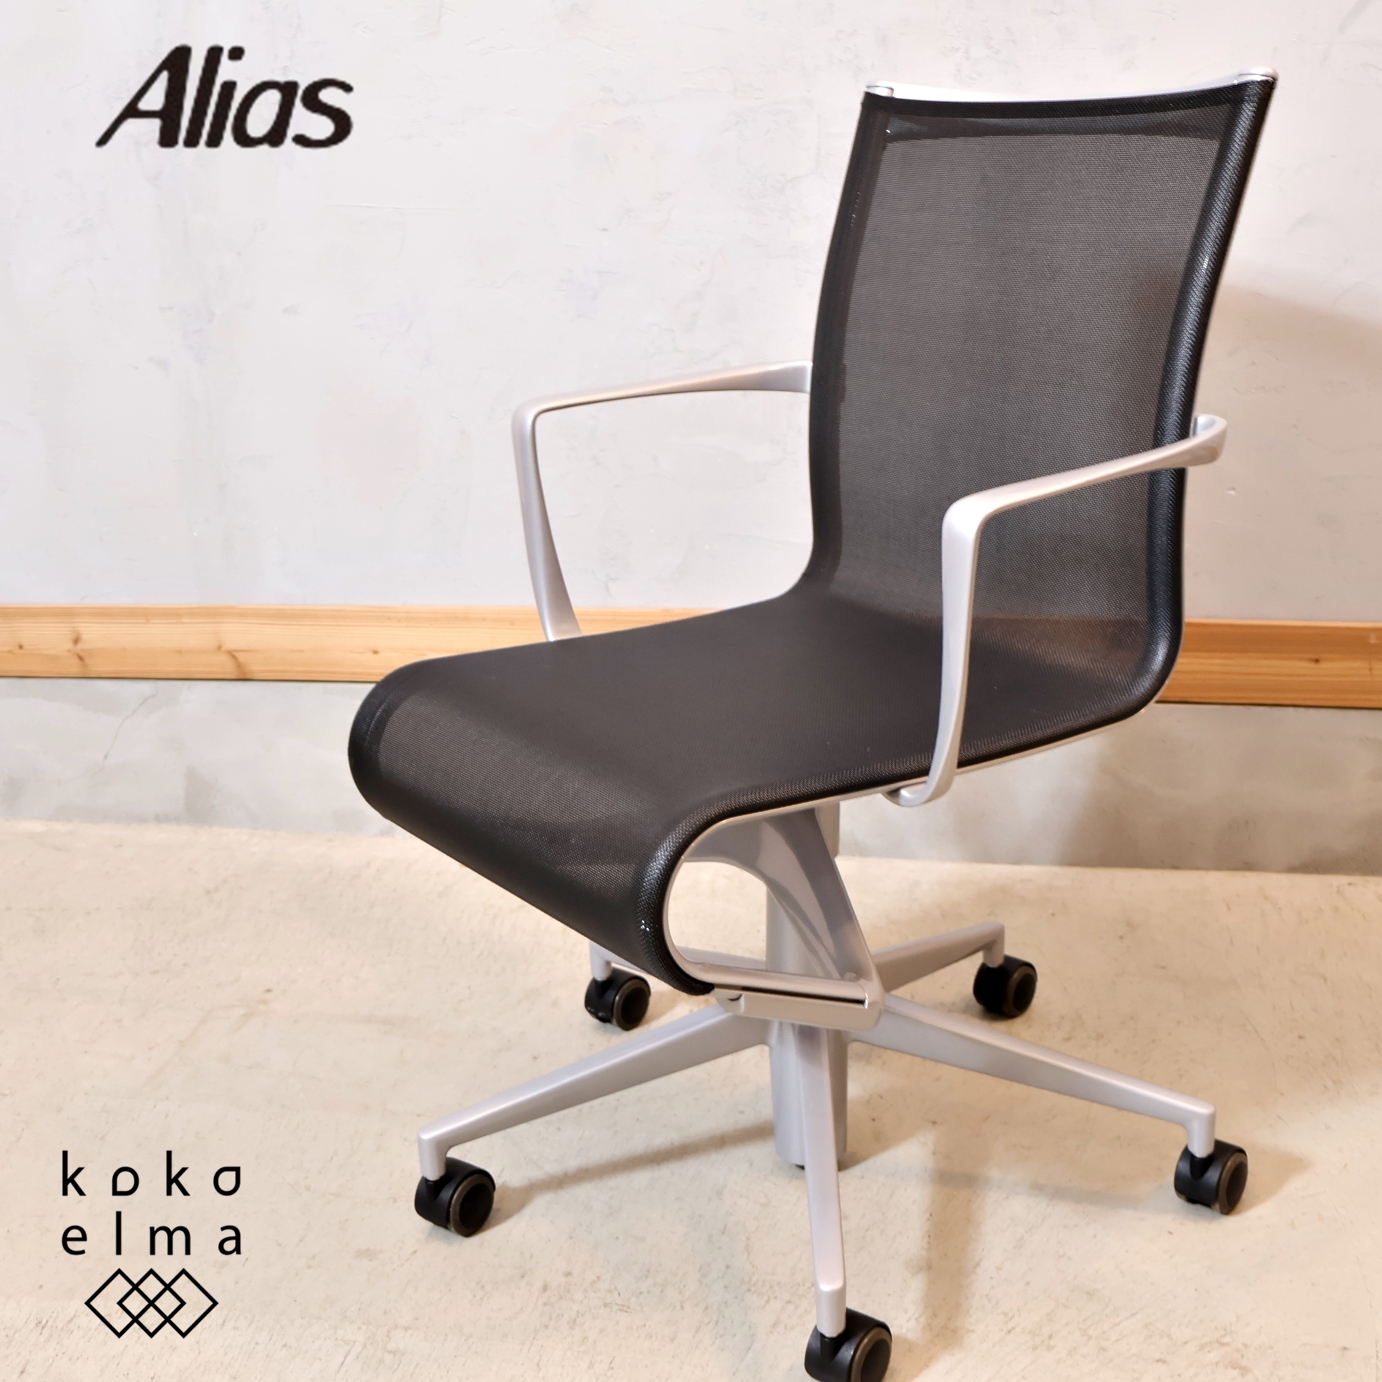 Cassina ixc.kasi- narrow ring frame caster swivel chair arm chair Alias Aria s desk chair high class EC242